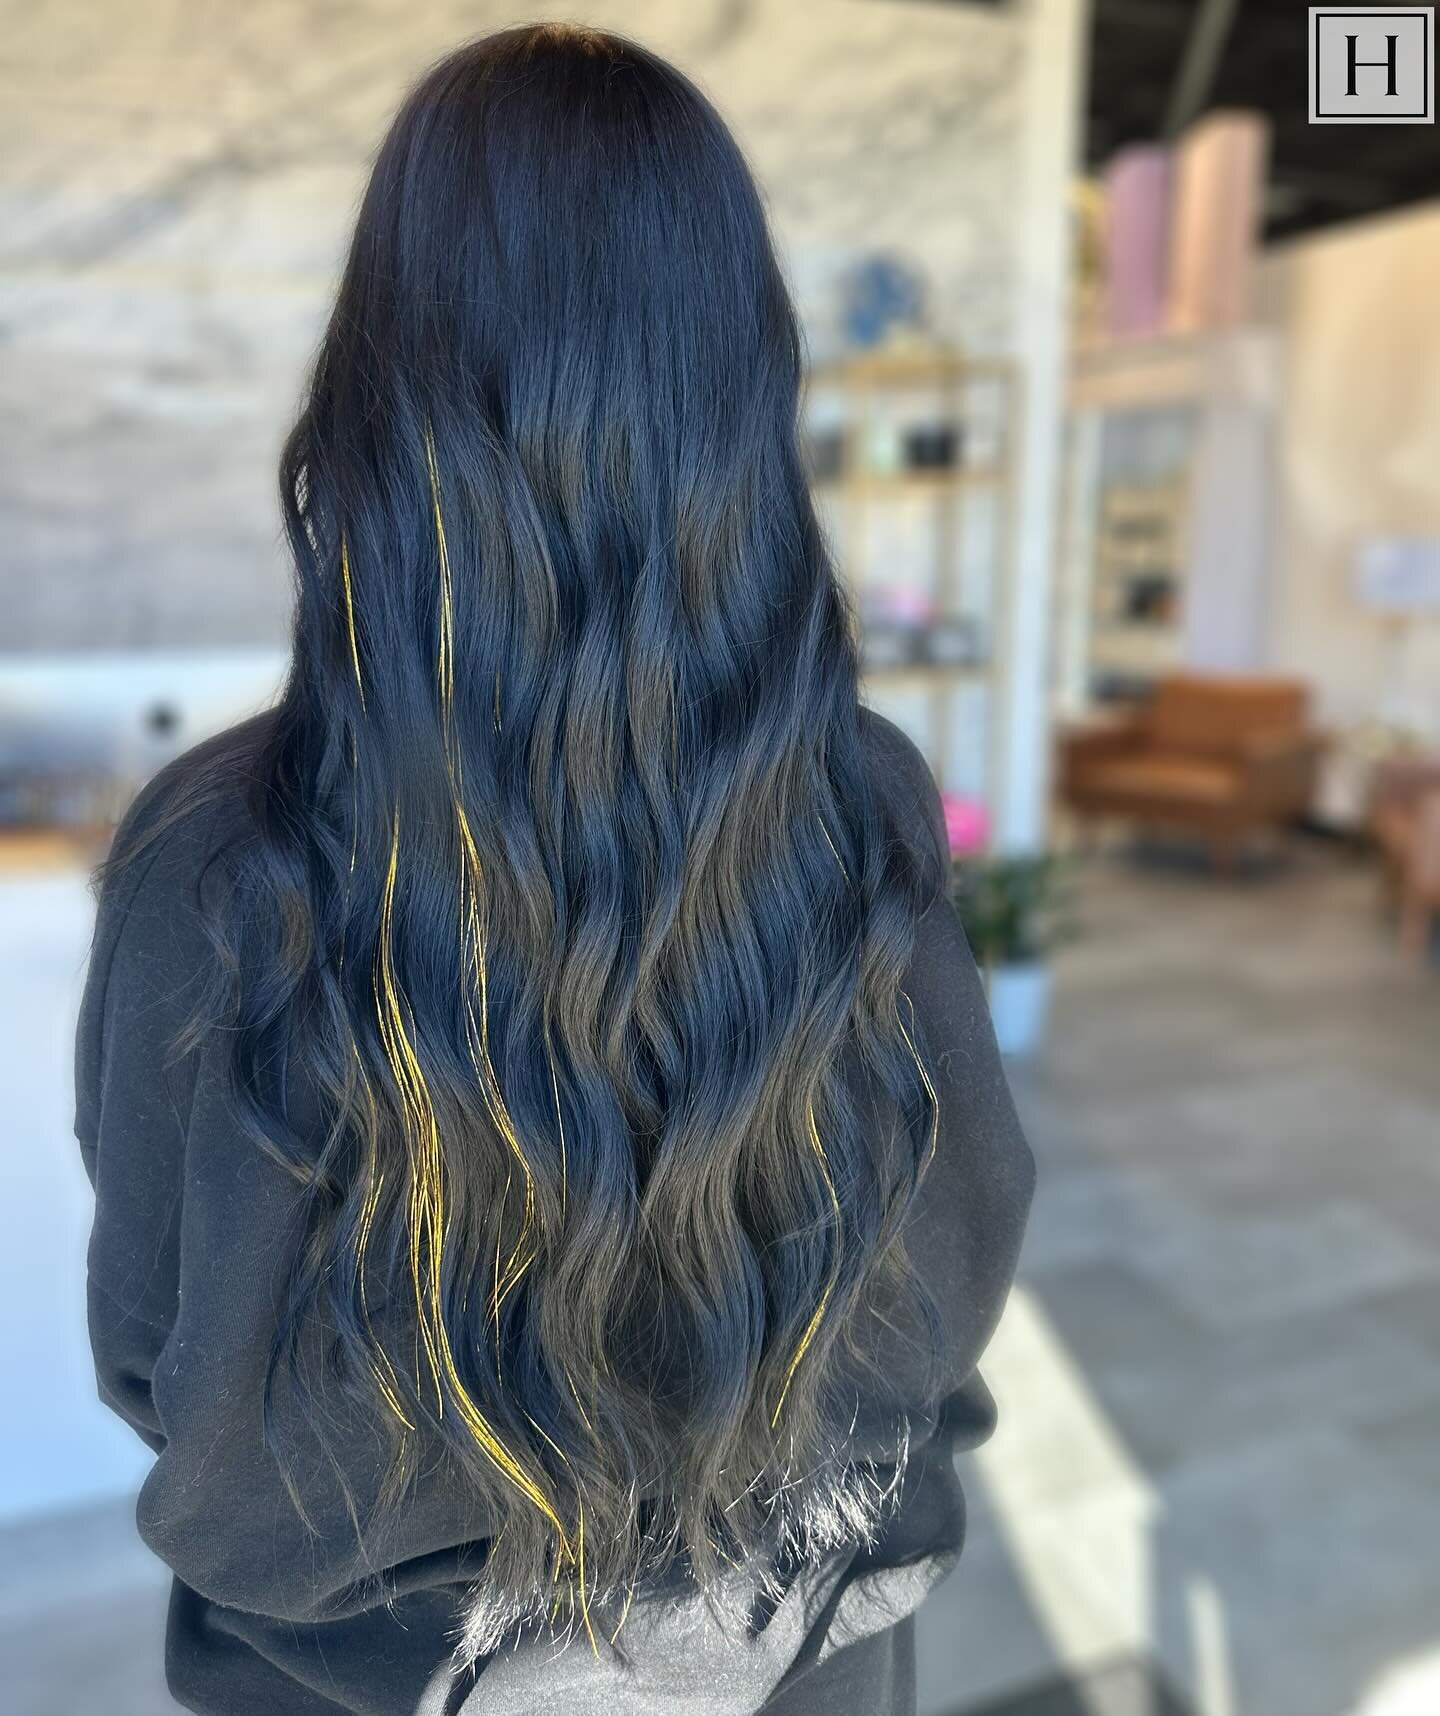 Blue black 💙🖤 (&amp; gold) 🤪

Stylist: @stylesbyrachelb 

#hair #hairsalon #hairstylist #hydesalon #hydechapin #chapinsc #chapincommons #lakelife #lakemurraysc #lakemurray #lakemurraycountry #bluehair #fairyhair #gold